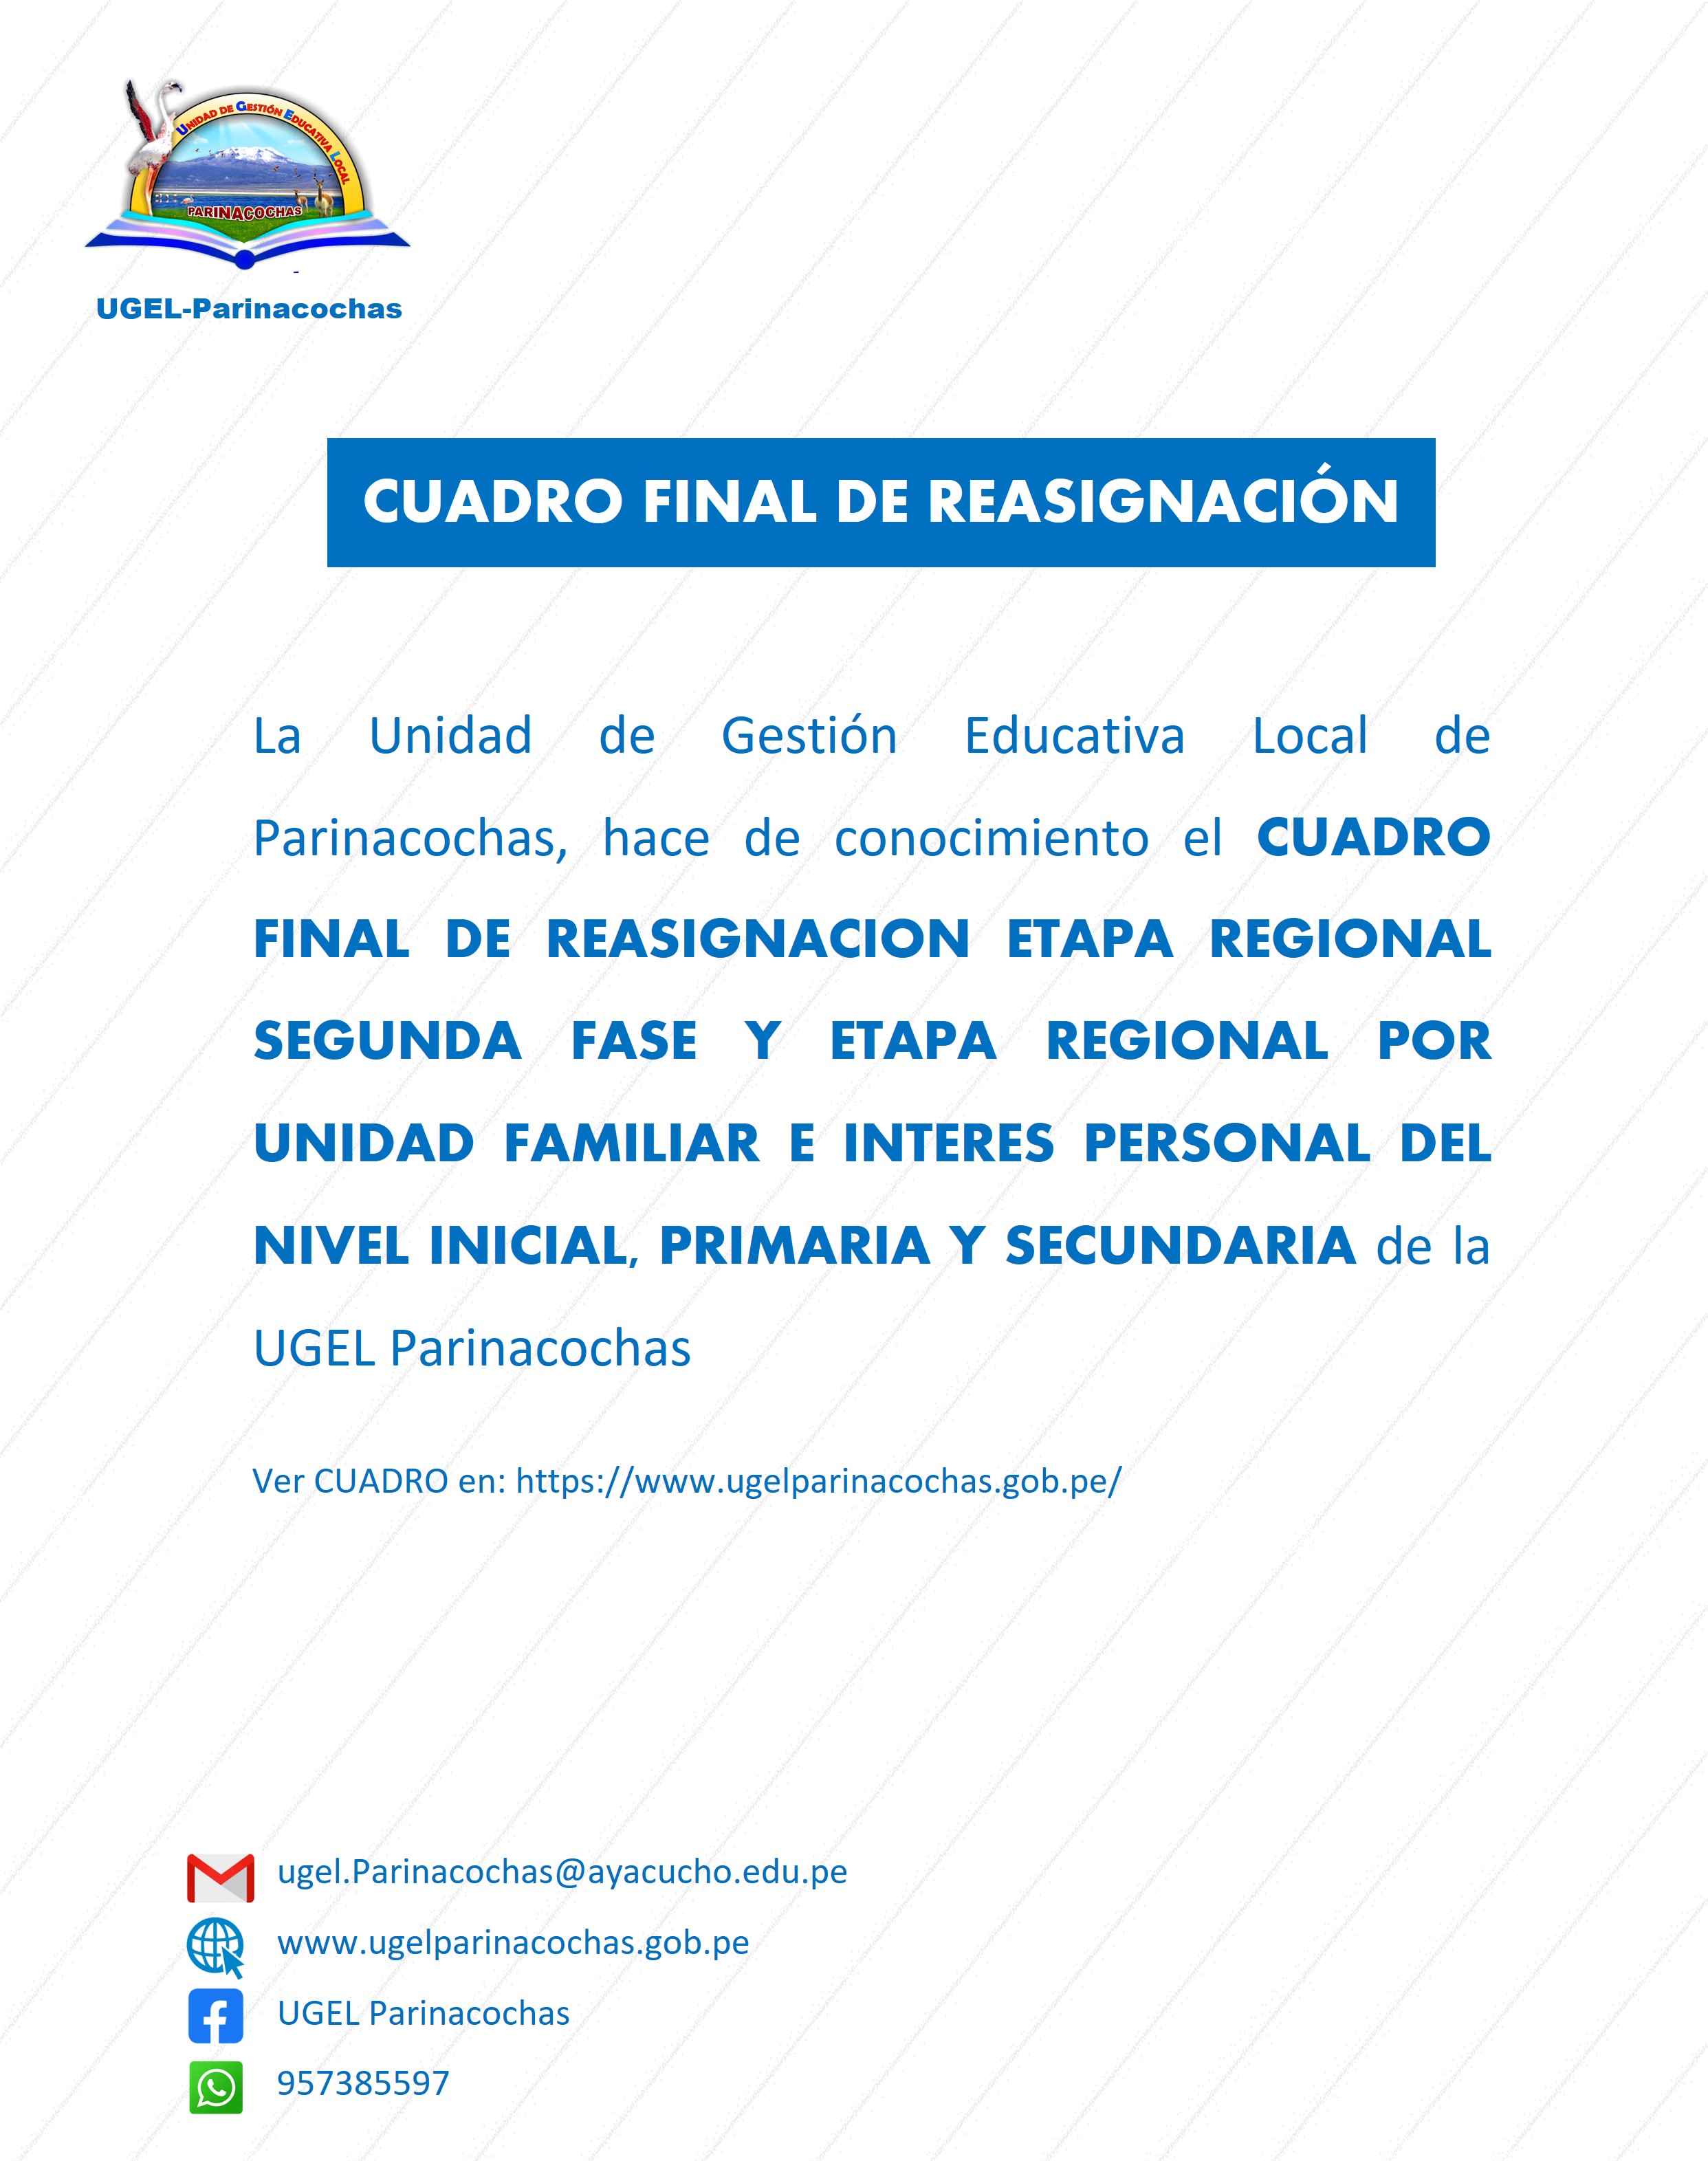 CUADRO FINAL DE REASIGNACION ETAPA REGIONAL SEGUNDA FASE DE LA UGEL PARINACOCHAS